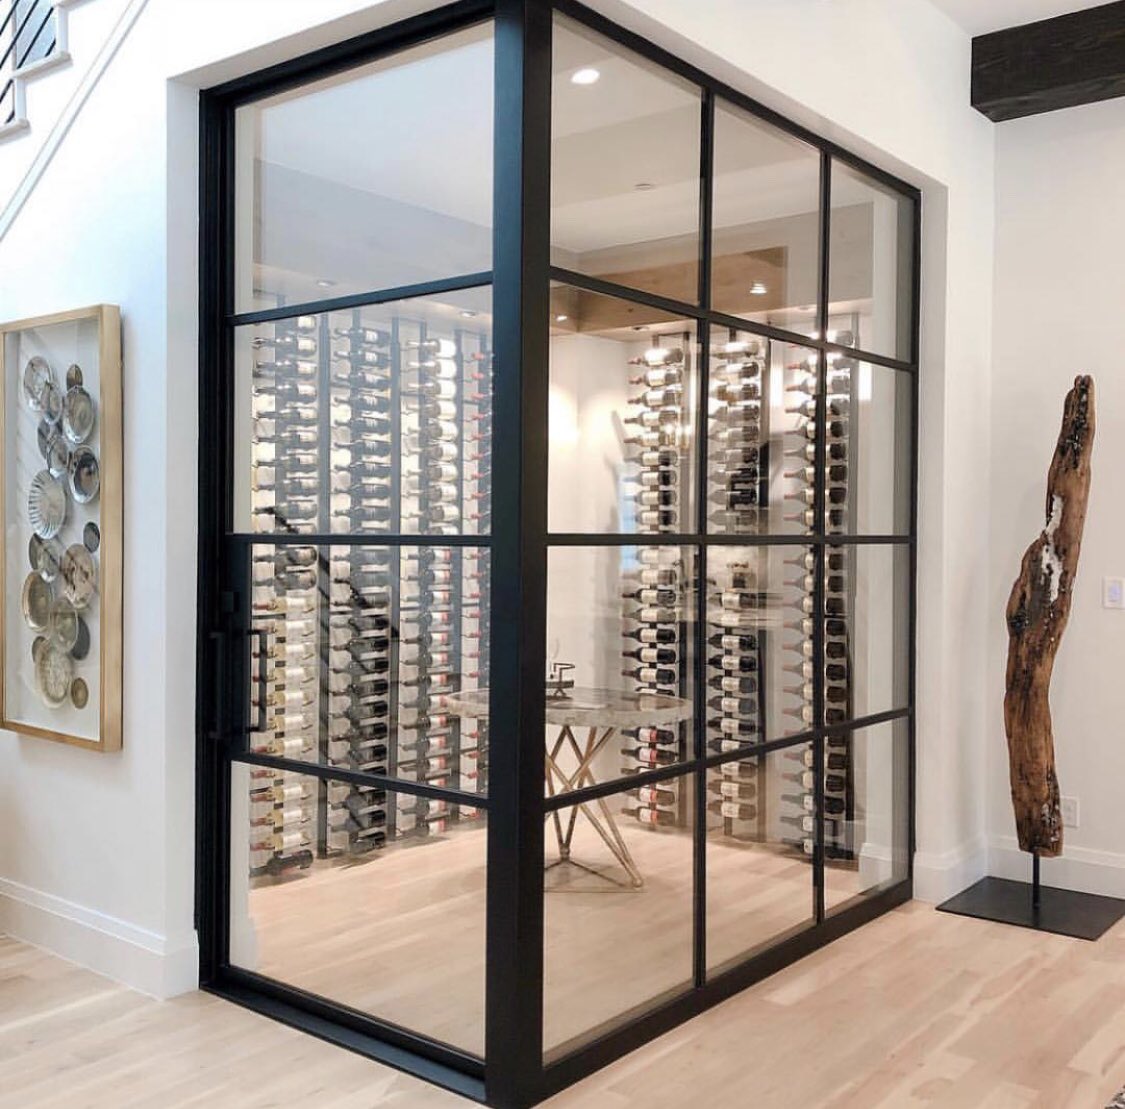 In need of wine, NOW! And I ❤️ this wine cellar.
.
.
.
.
. #wine #now #drink #winecellar #winecellardesign #glass #home #design #designer #homeinterior #thursday #thirstythursday #drinktraveldine